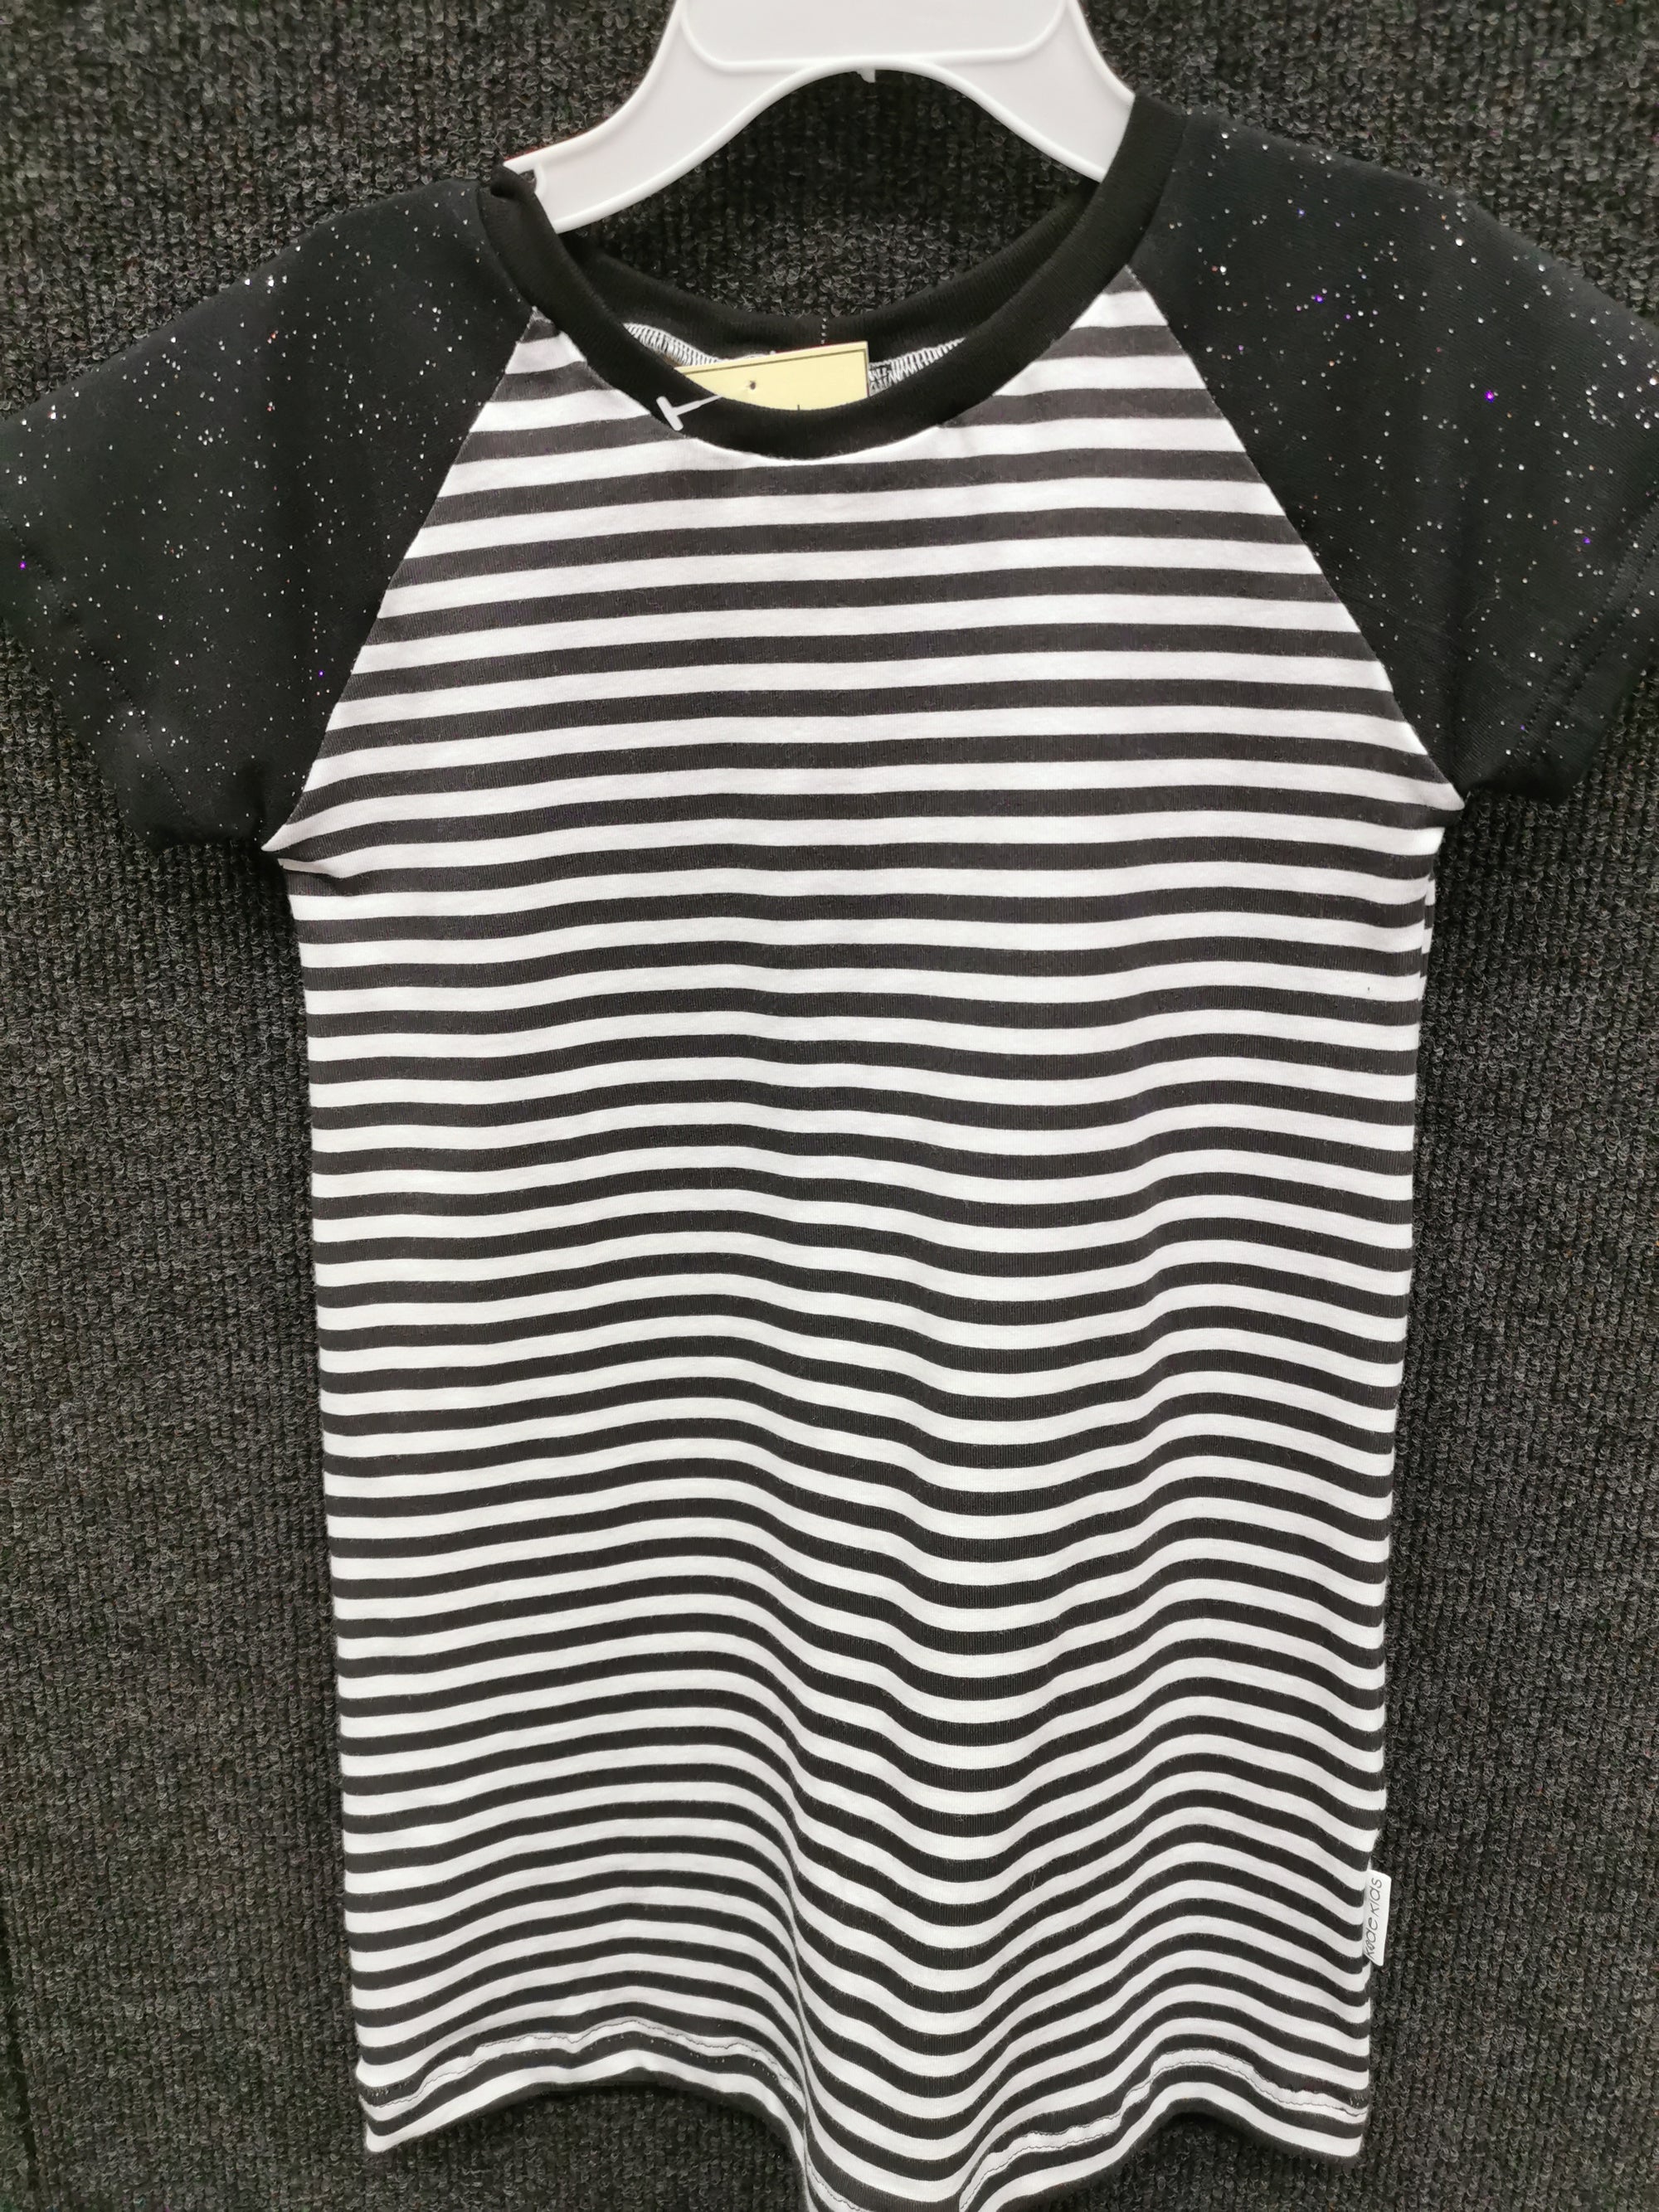 Millie T-Shirt Dress | Black & White Stripe Kode Kids